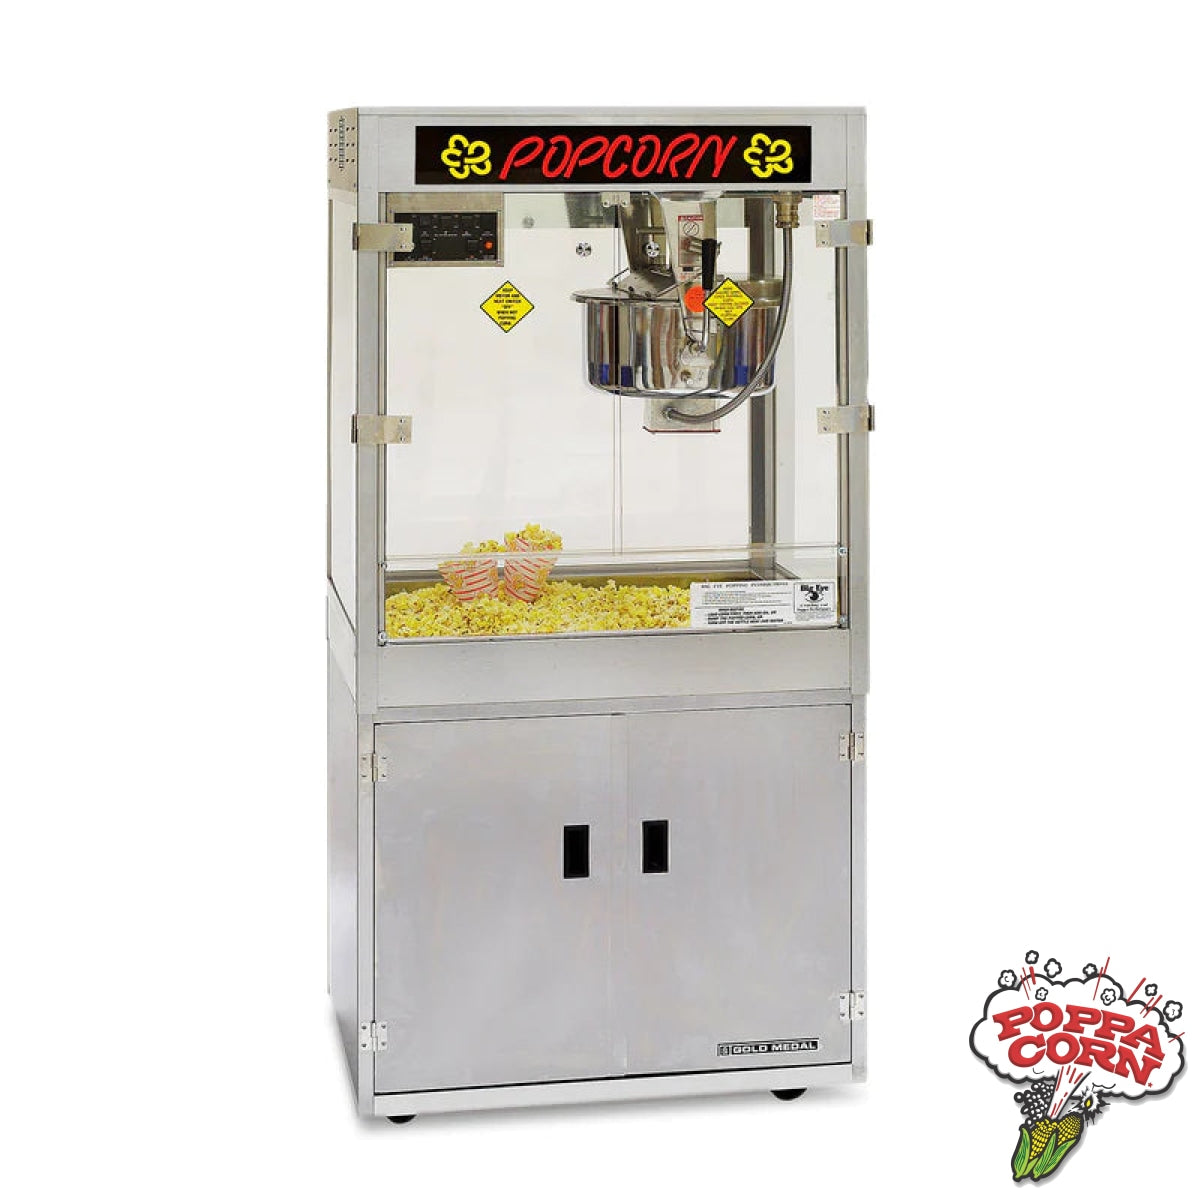 Spartan 52-oz Popcorn Machine - GM2671-071 - Poppa Corn Corp